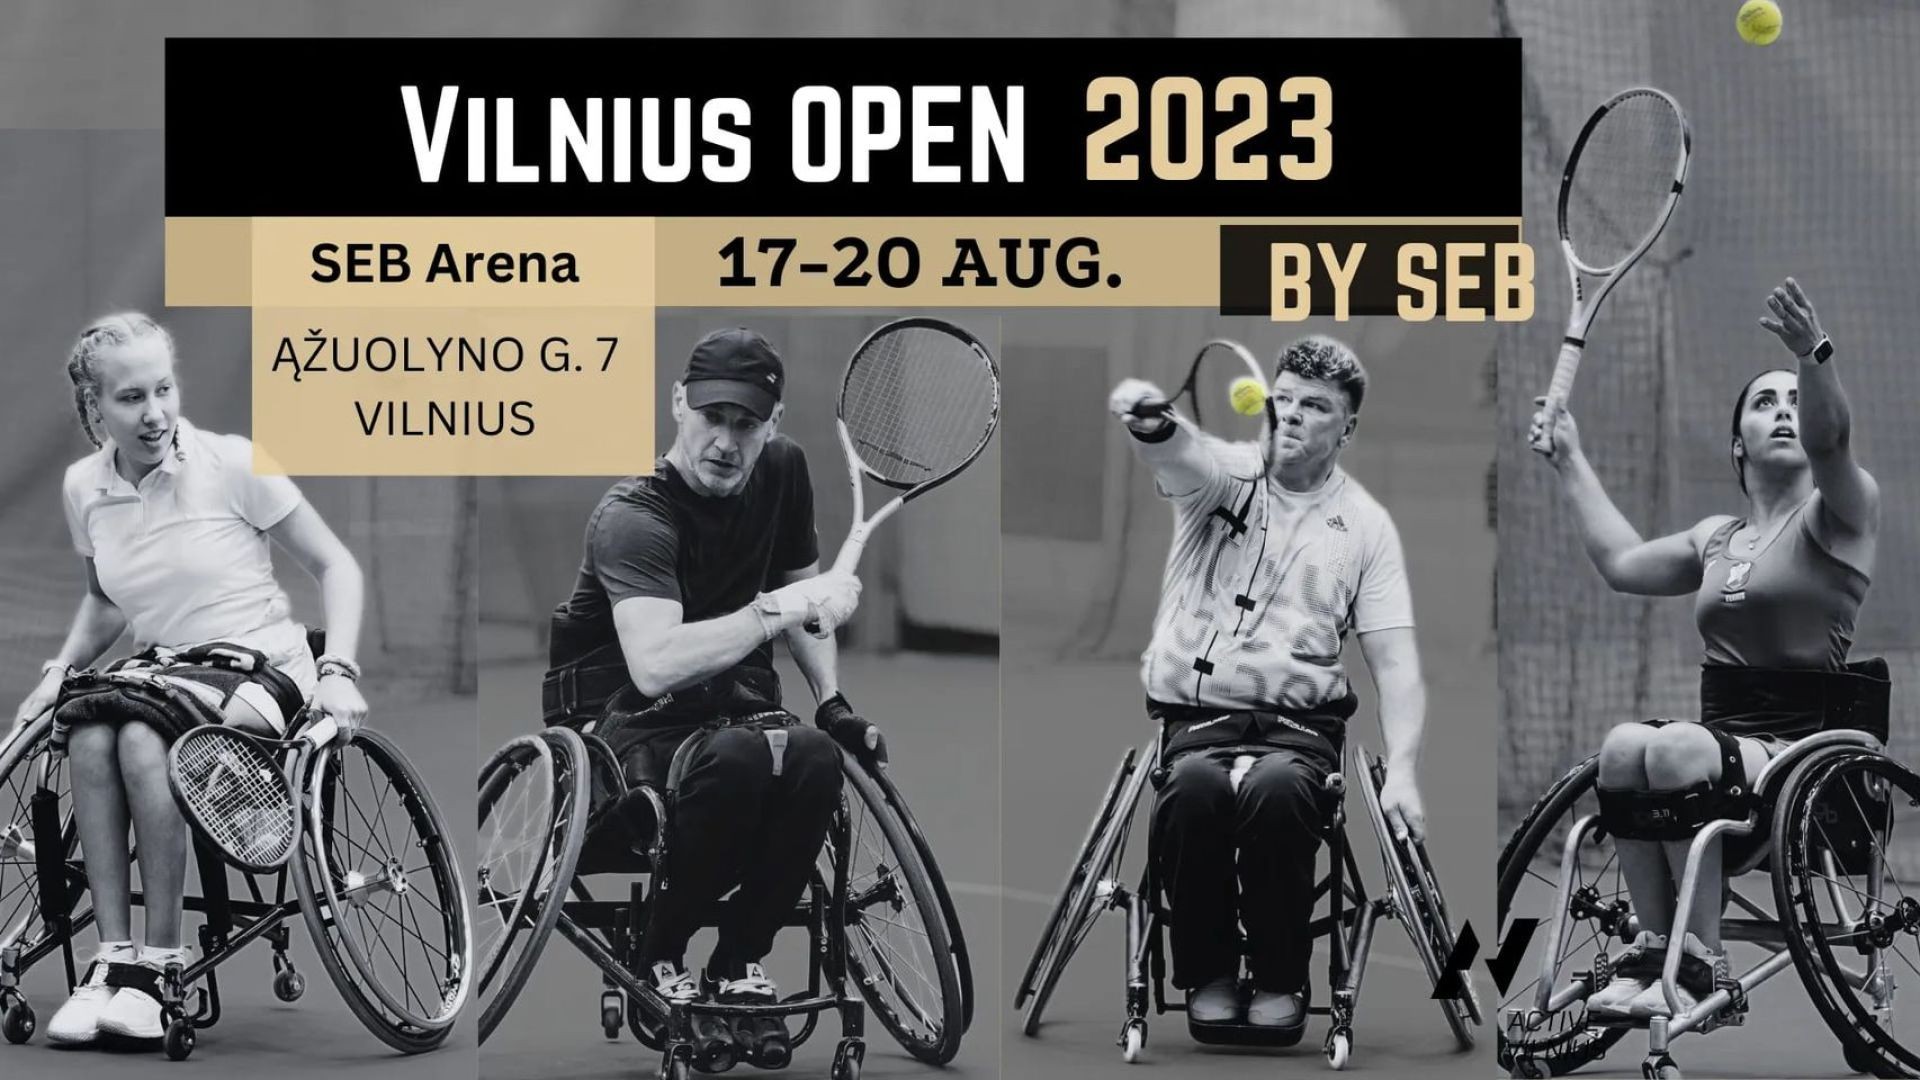 COURT 6  DAY 1 - VILNIIUS OPEN 2023 BY SEB